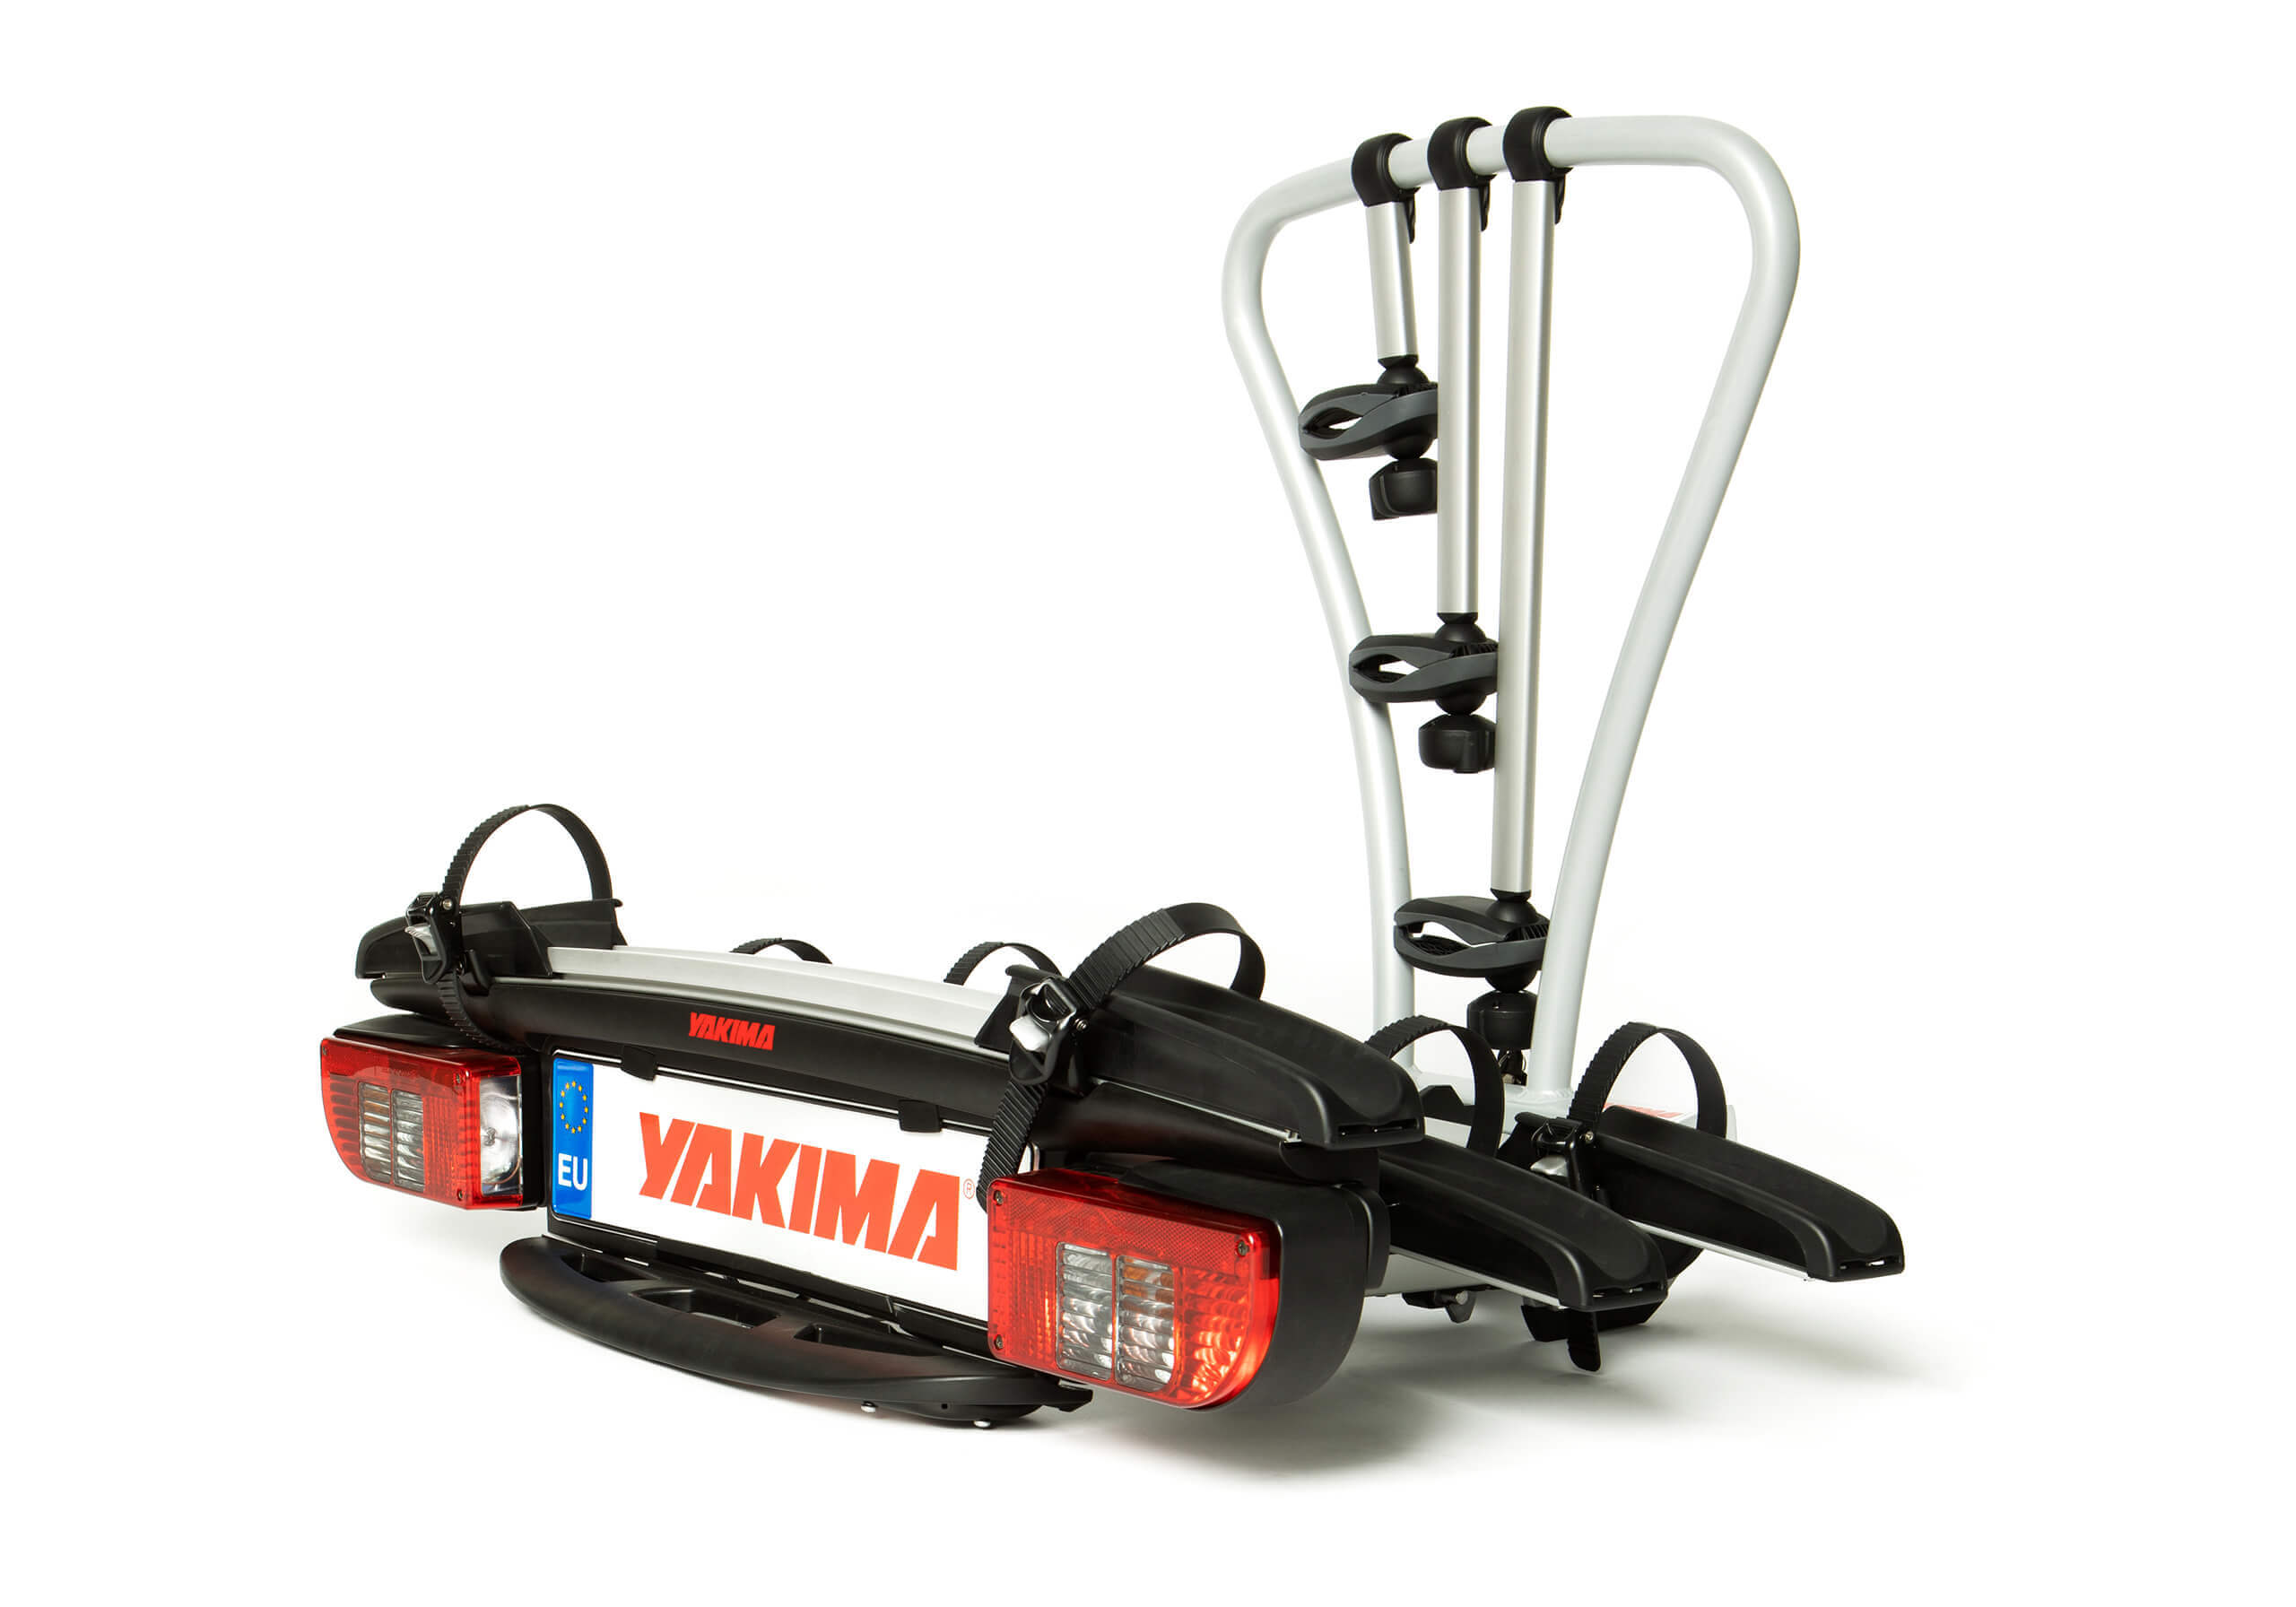 :Yakima JustClick 3 bike tow bar carrier no. 8002487